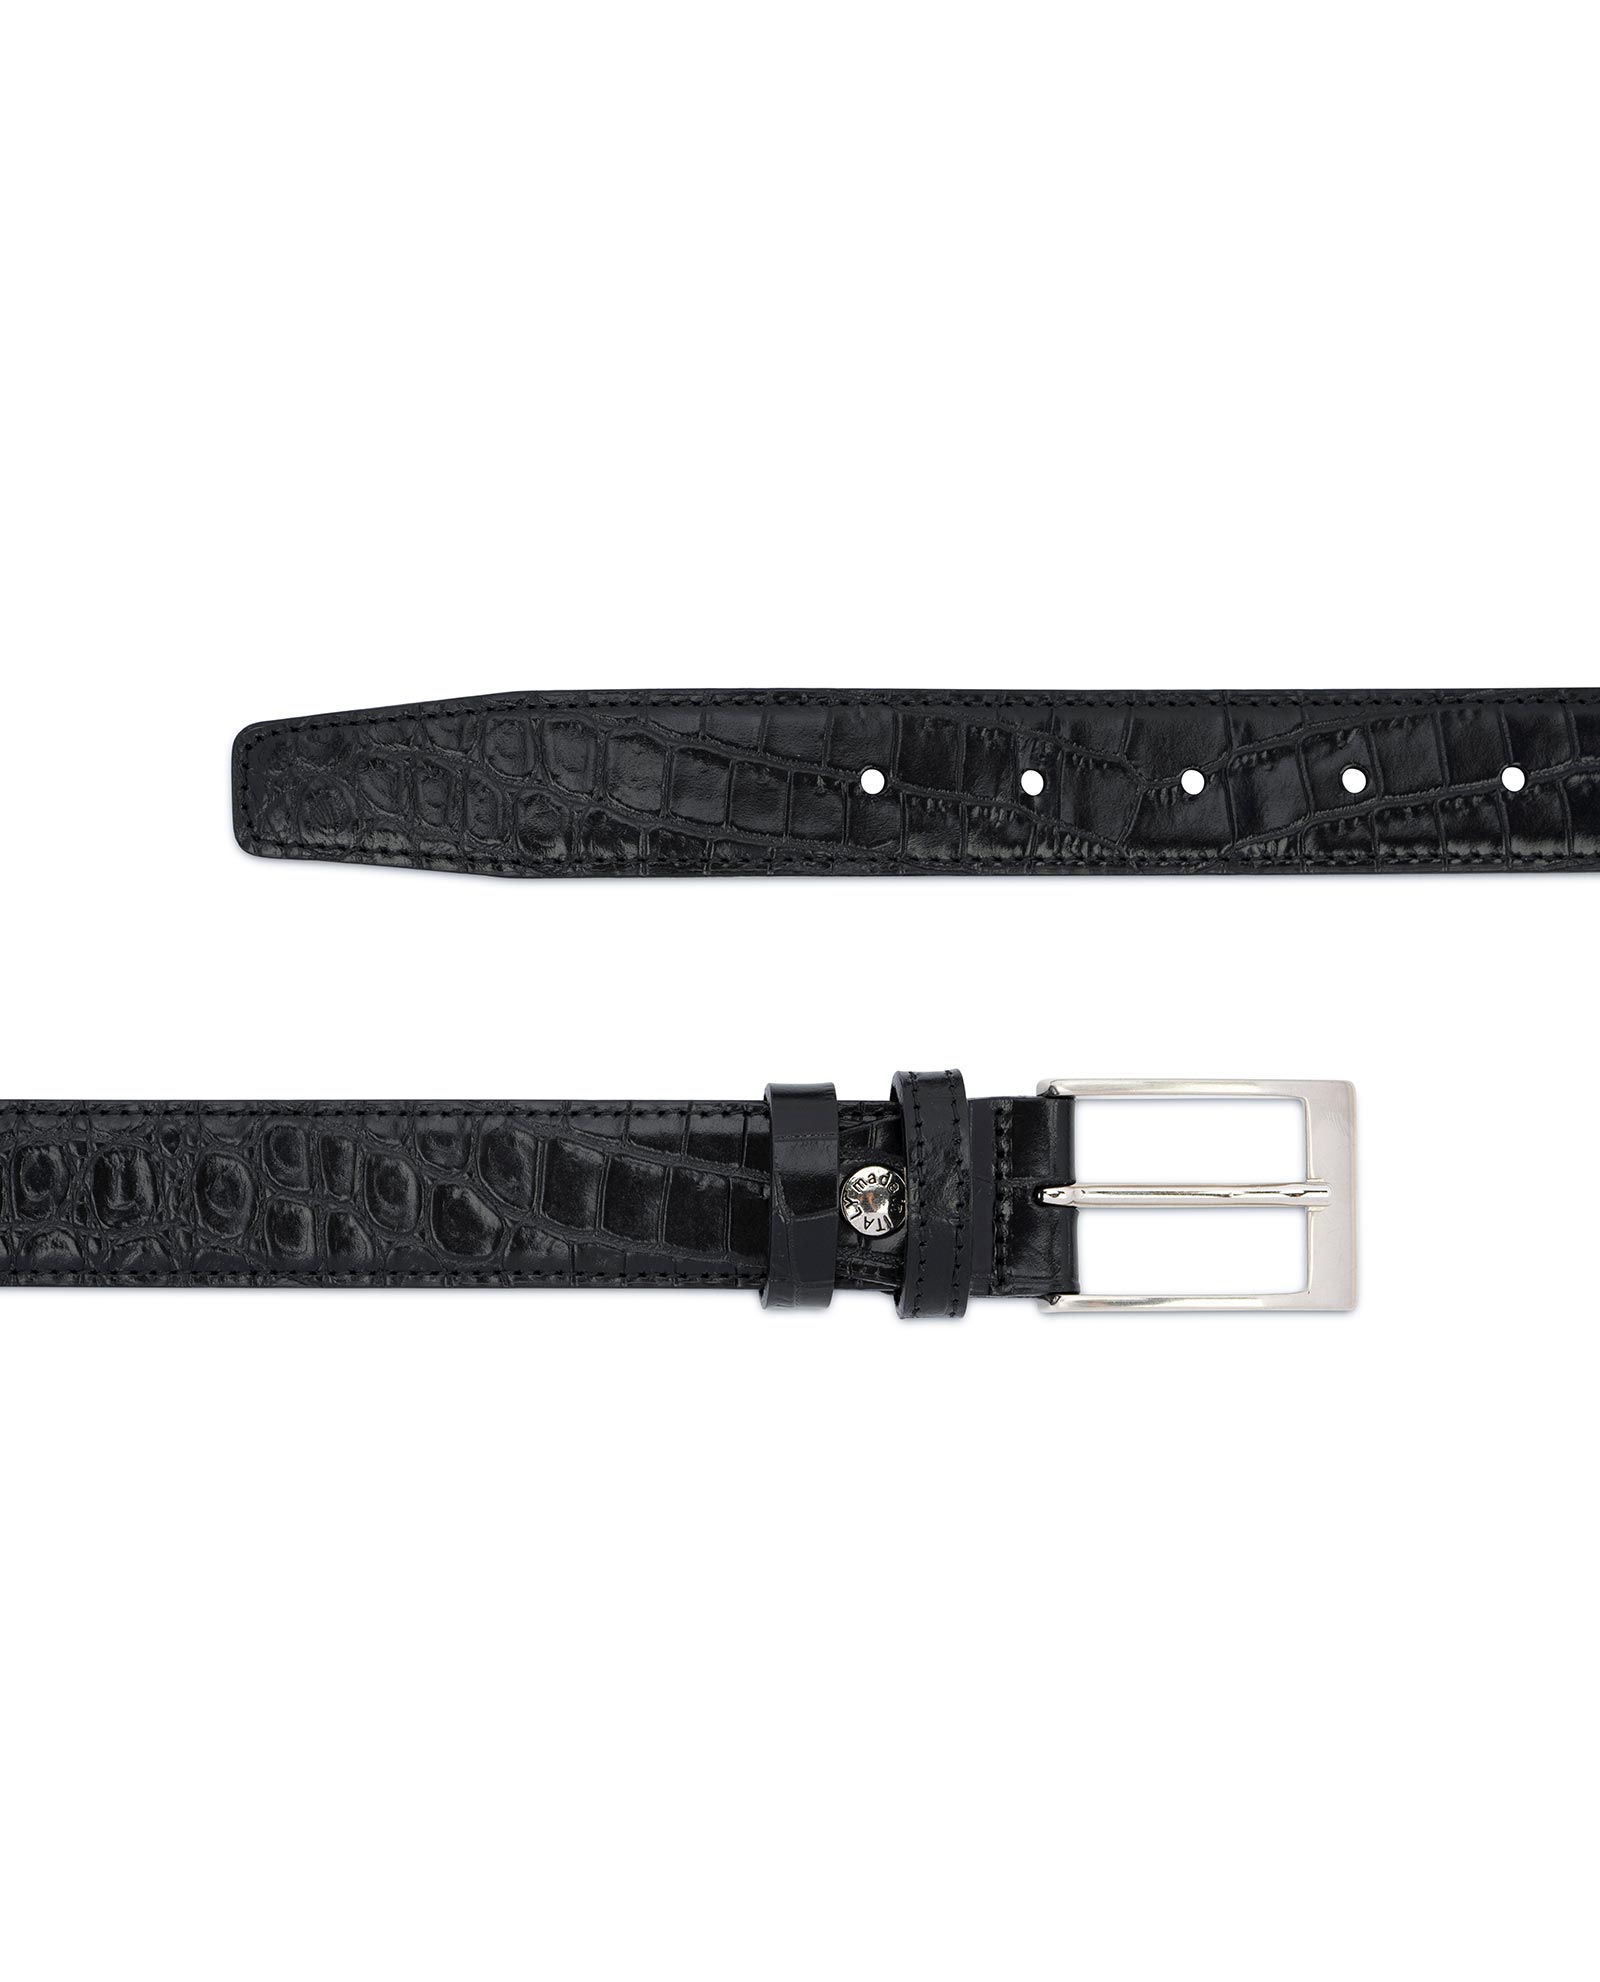 Buy Croco Belt for Men | Black 3.0 cm | LeatherBeltsOnline.com